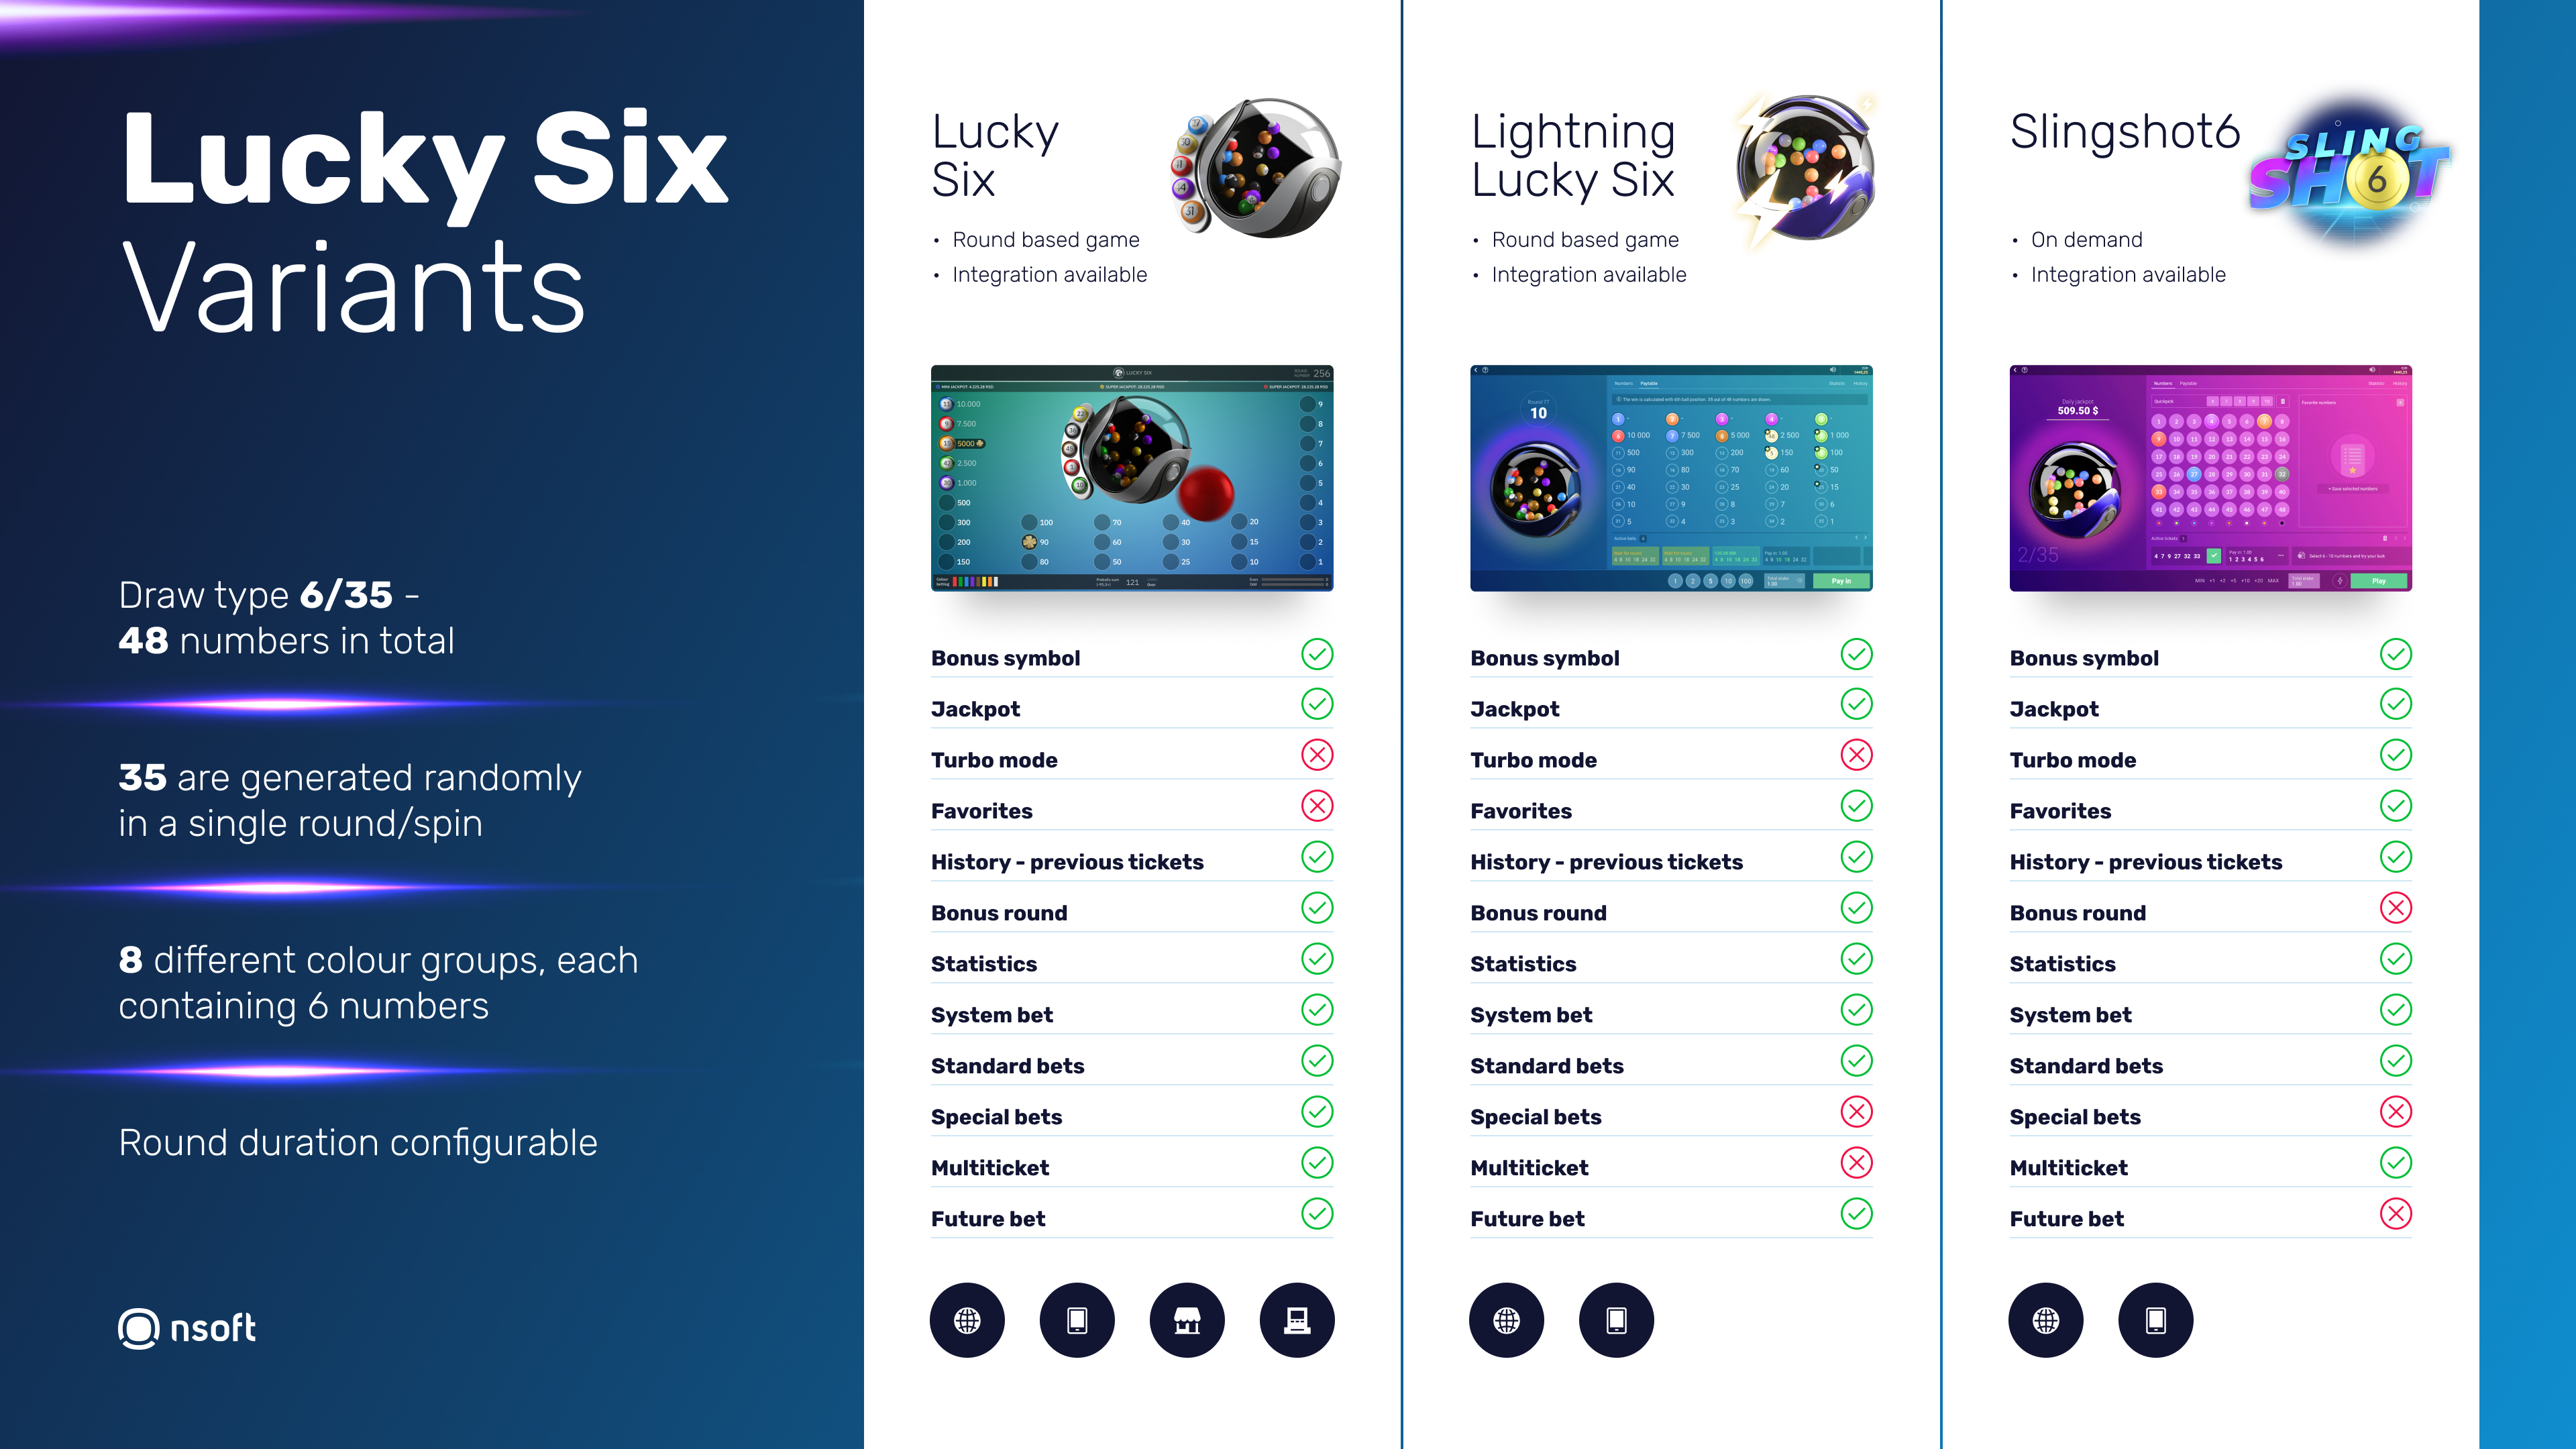 Infographic: Lucky Six - Lightning Lucky Six - Slingshot 6